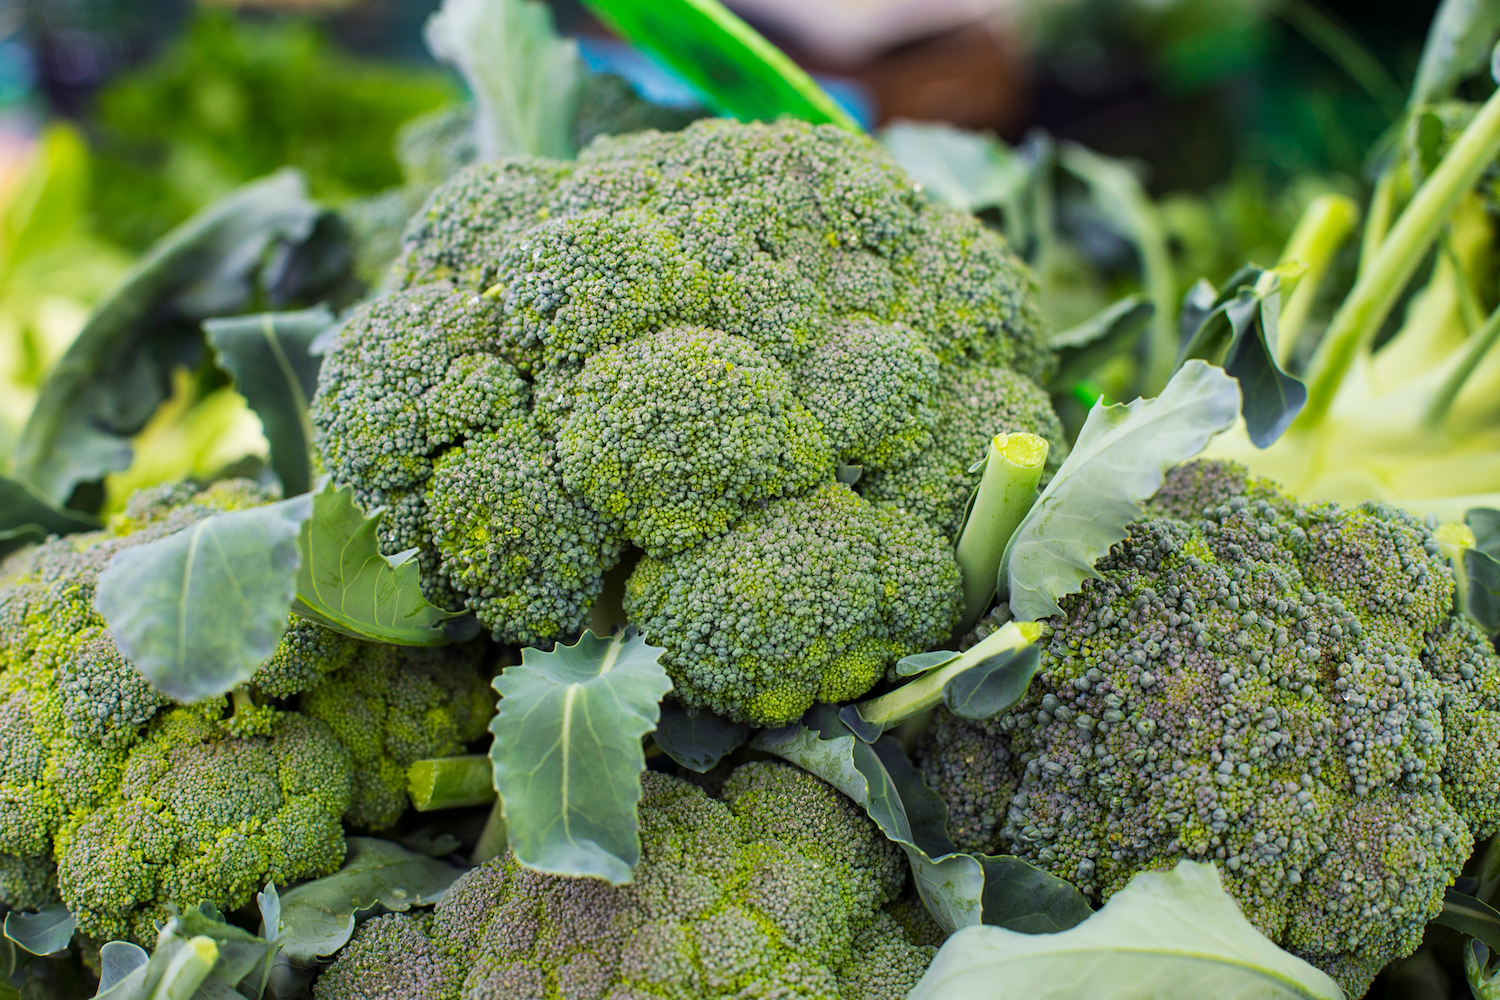 Broccoli Health Benefits